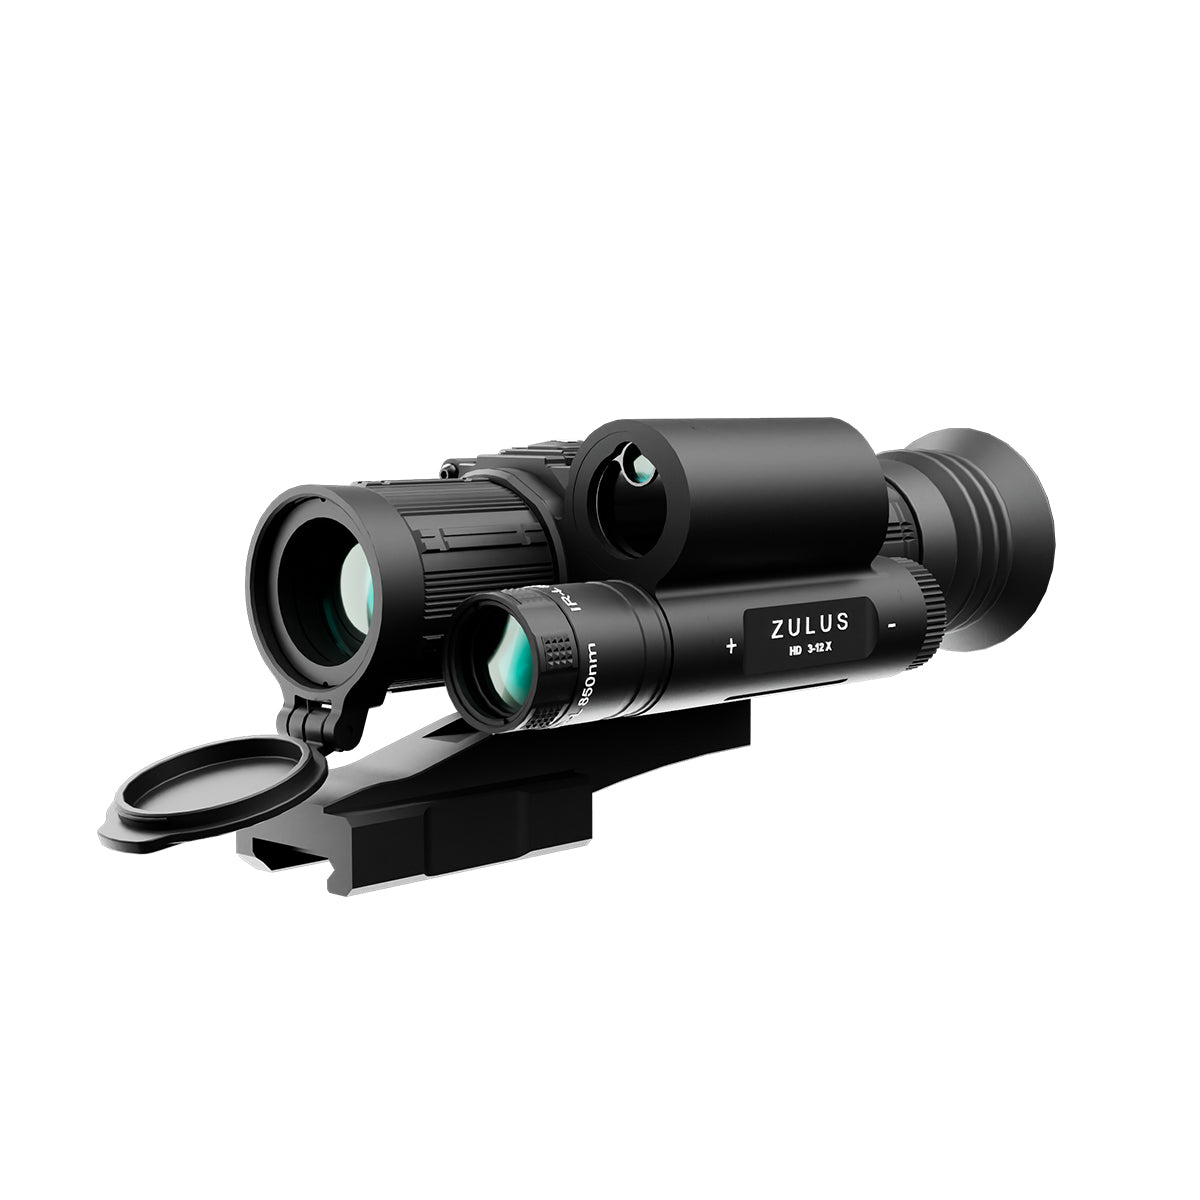 ZHD312R - ZULUS HD 3-12X Digital Night Vision Scope with Laser Rangefinder and Ballistic Calculator